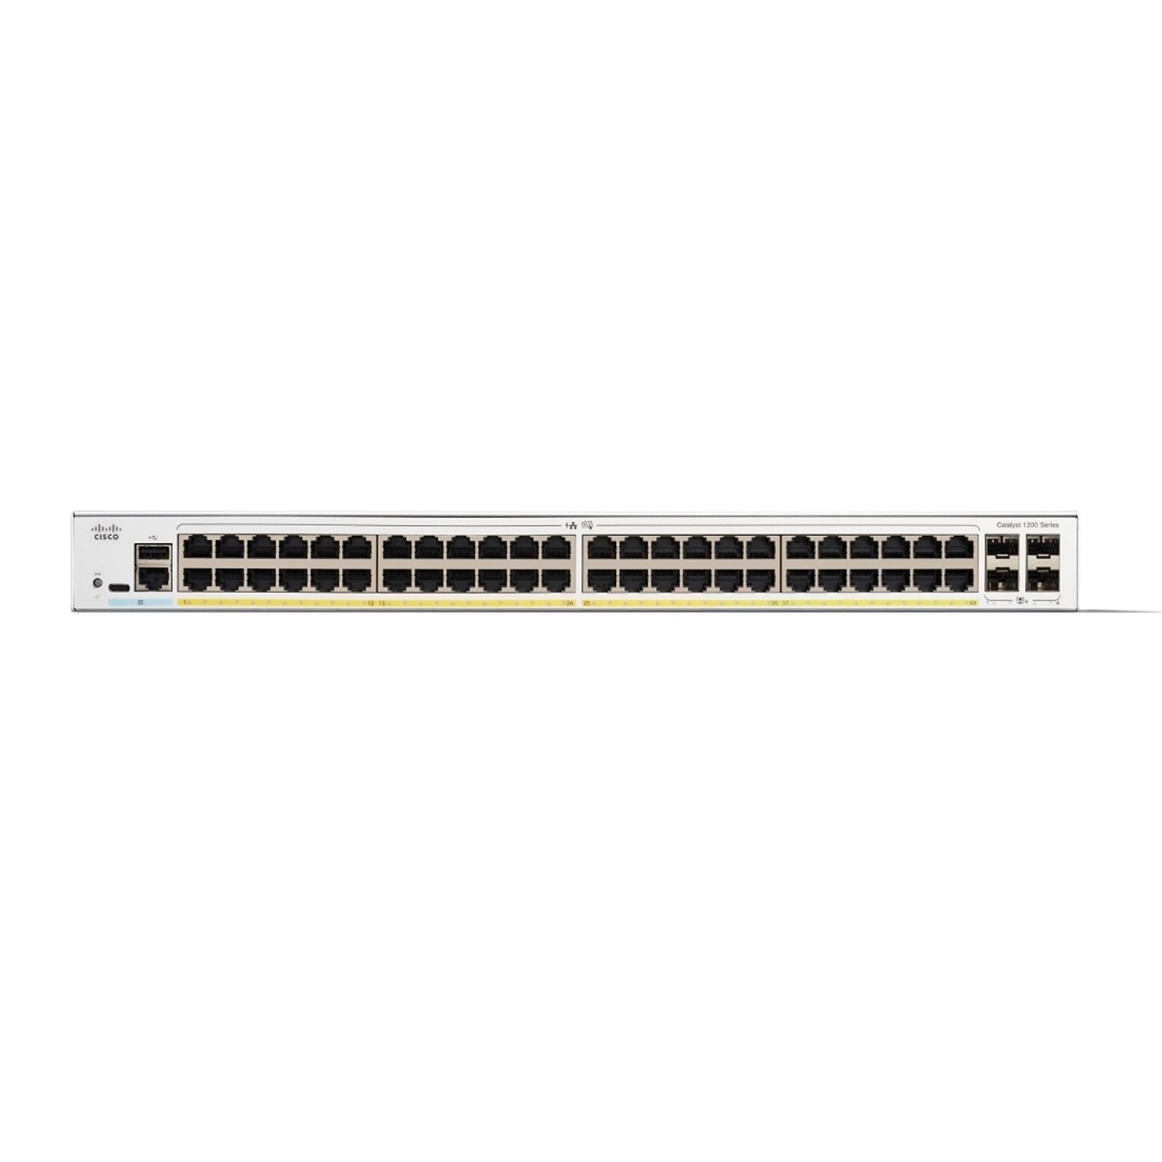 Cisco catalyst C1200-48P, 48 ports gigabit POE+ 375W + 4 x 10G SFP uplink ports switch